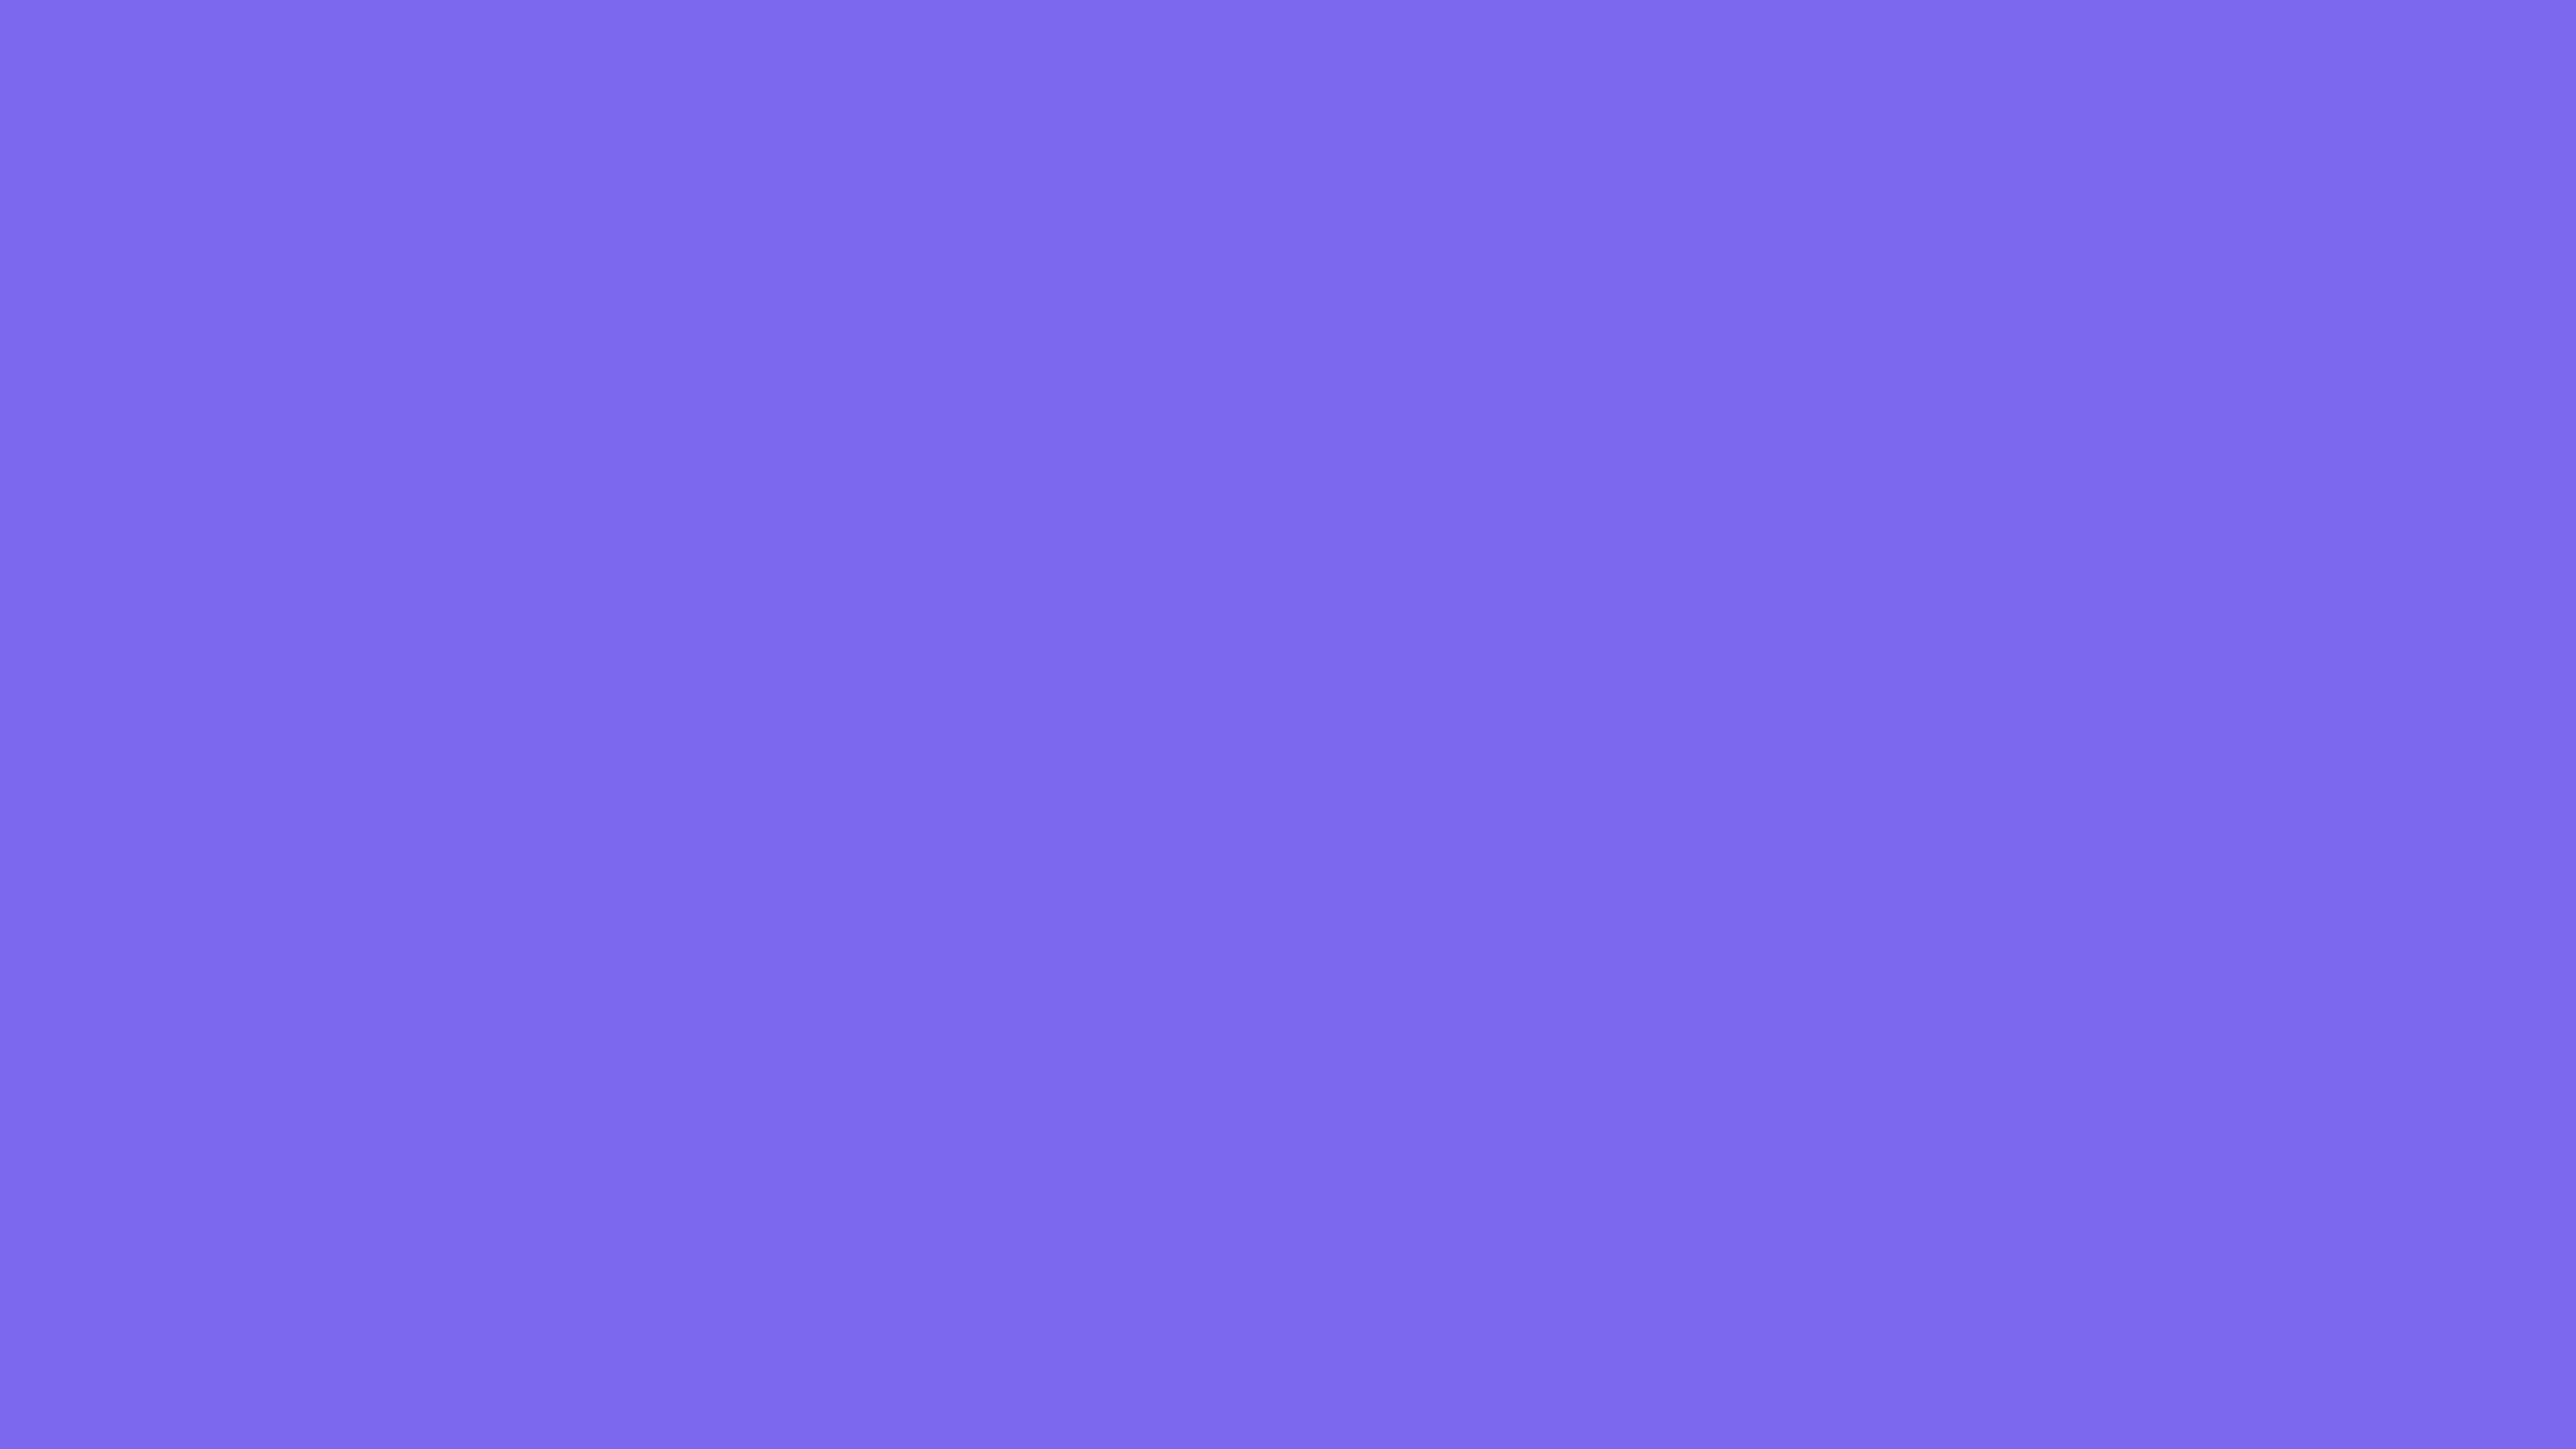 Medium Slate Blue Solid Color Background Image | Free Image Generator